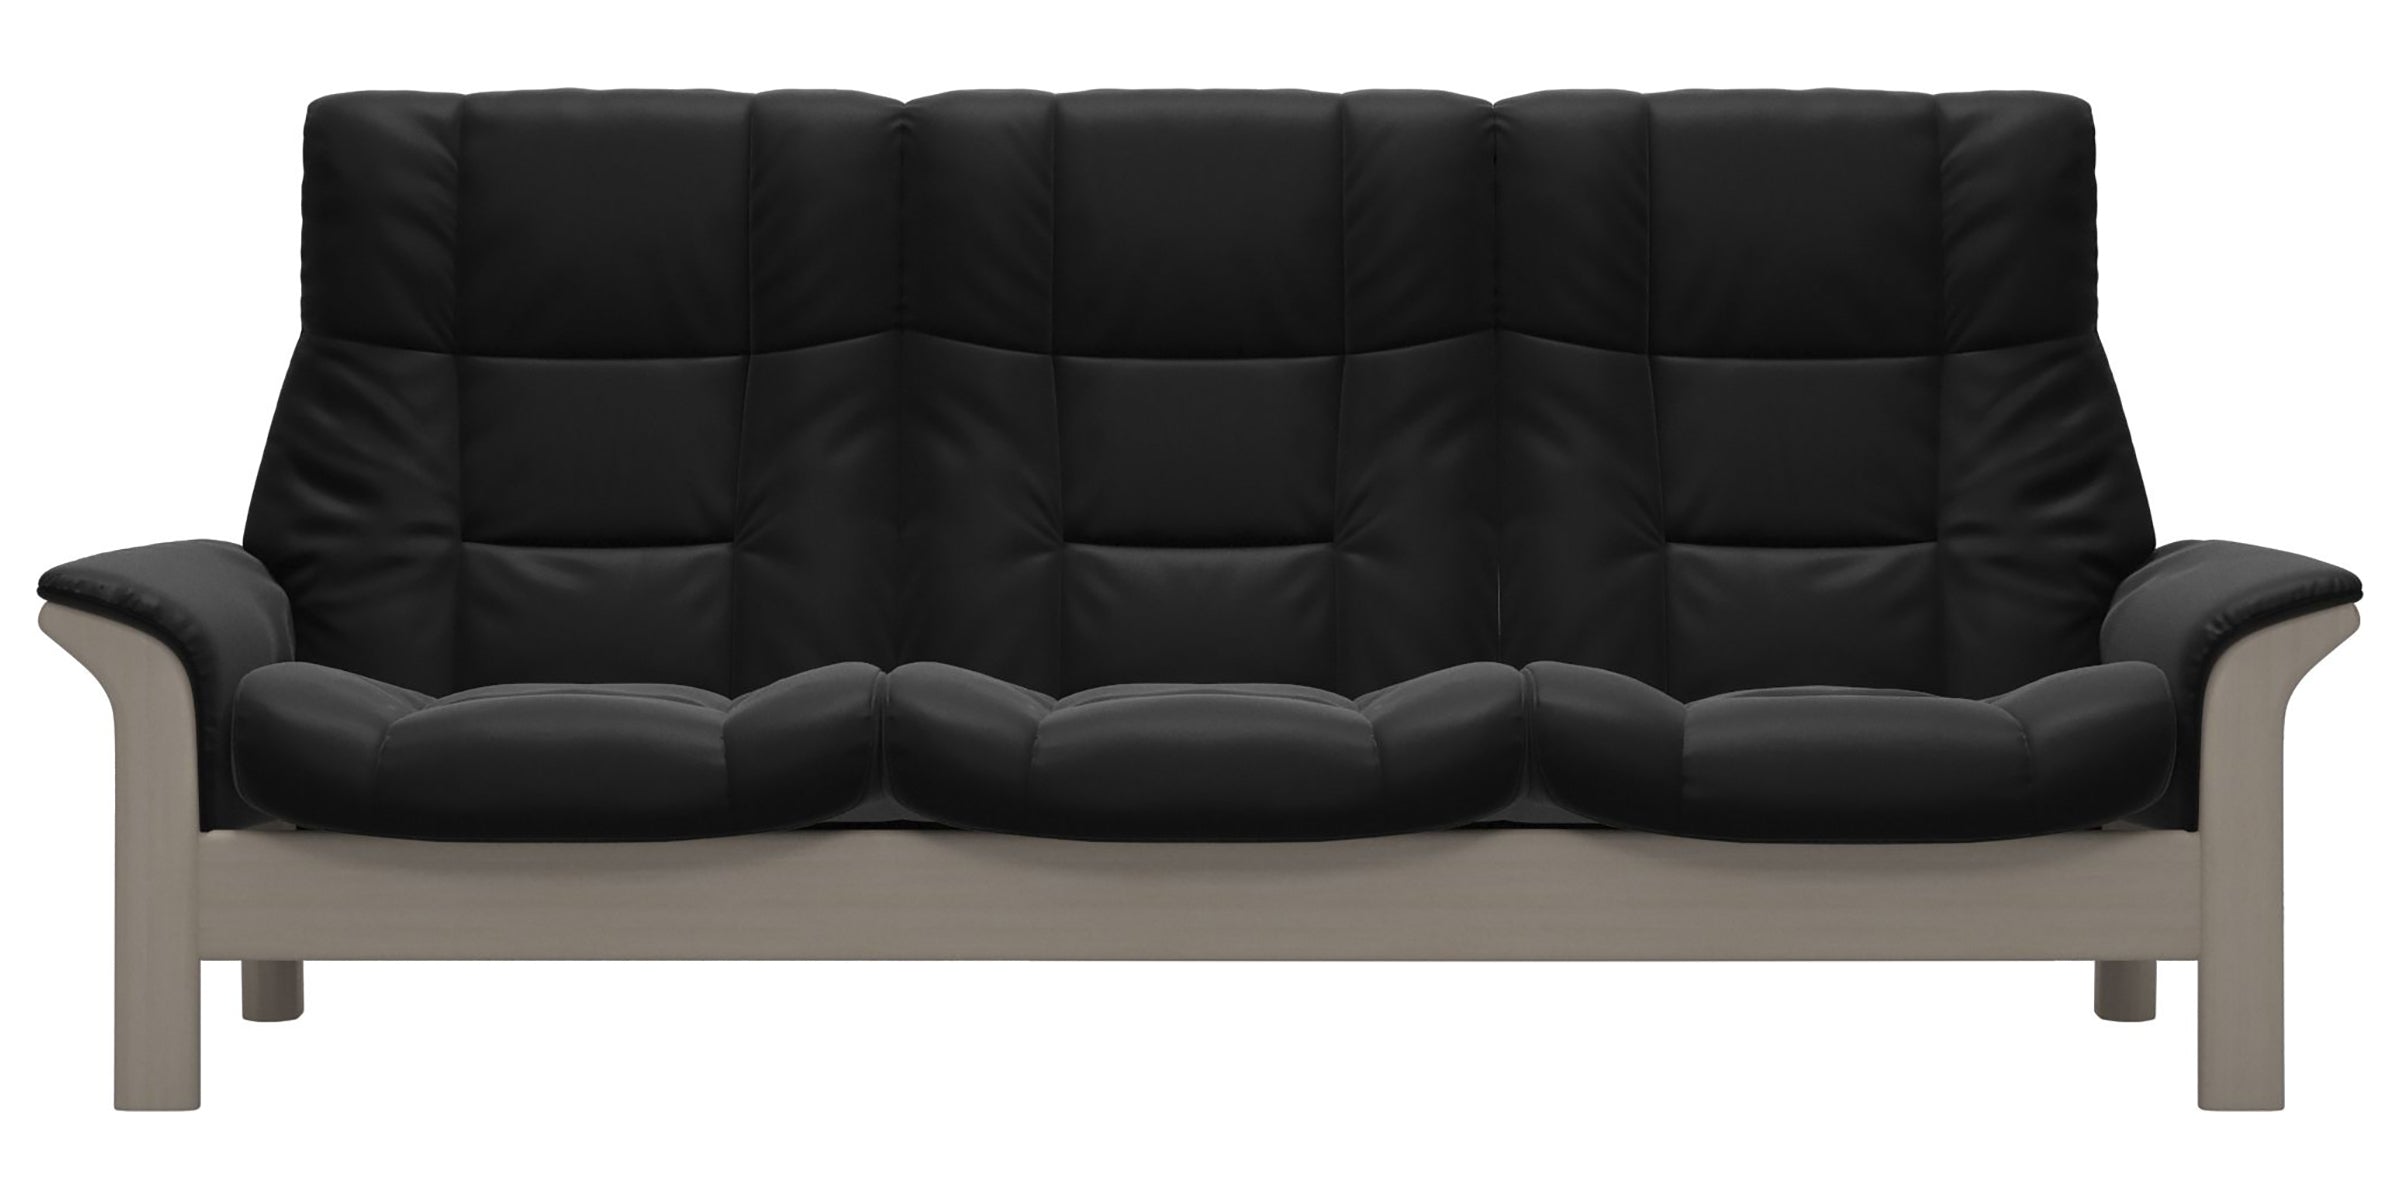 Paloma Leather Black and Whitewash Base | Stressless Buckingham 3-Seater High Back Sofa | Valley Ridge Furniture